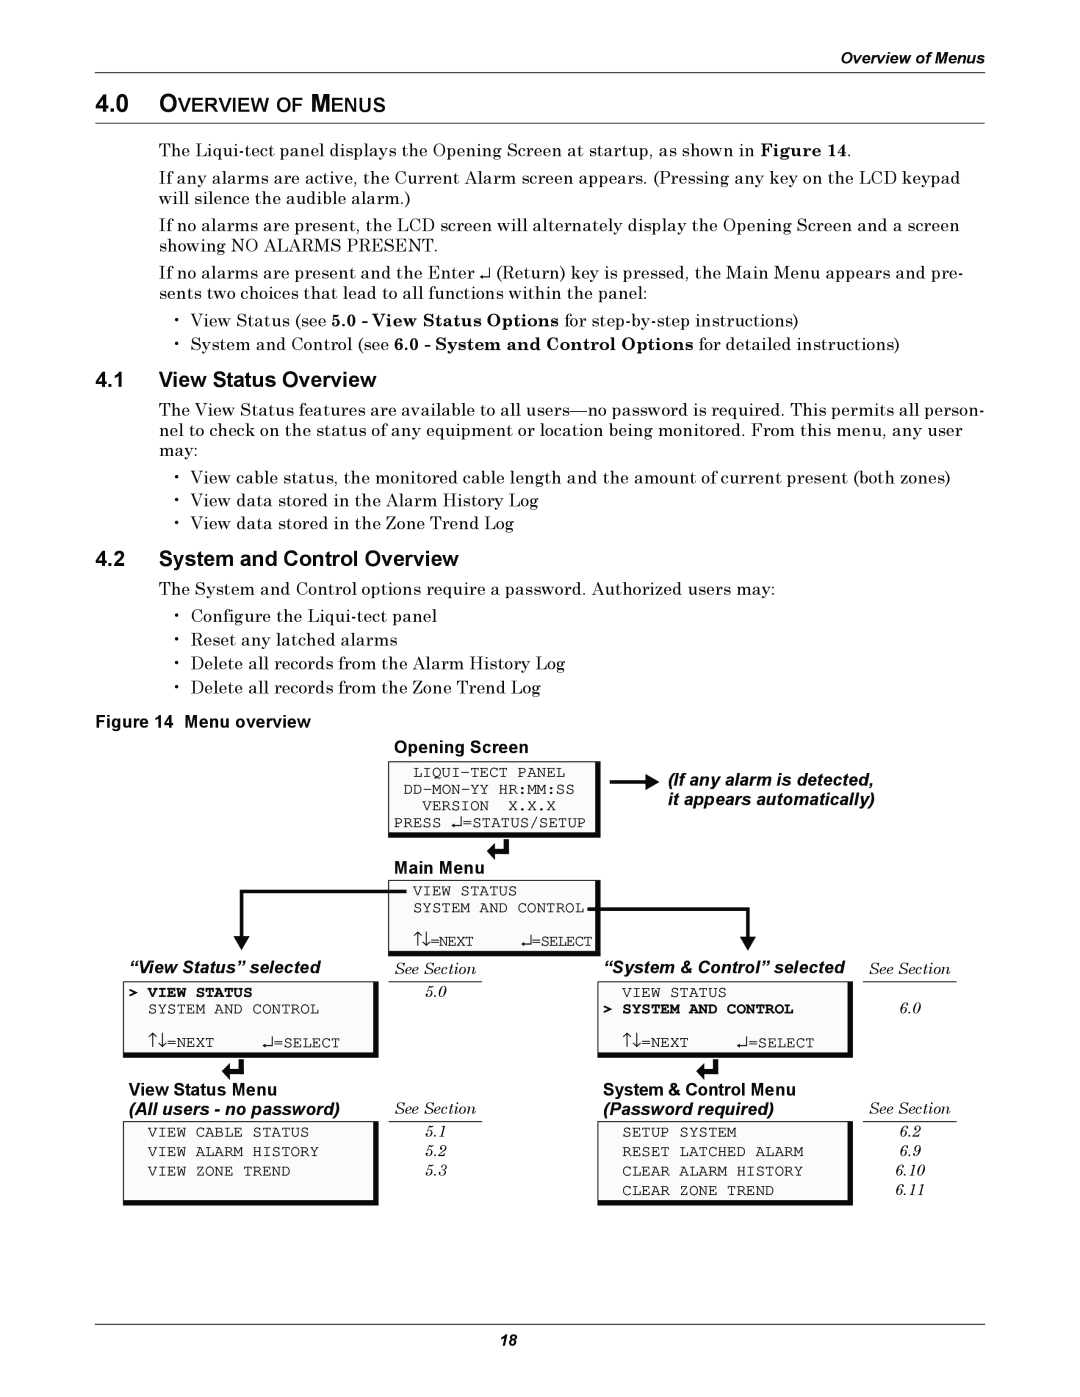 Emerson MC68HC16Z1 4.1View Status Overview, 4.2System and Control Overview, 4.0OVERVIEW OF MENUS, Menu overview, Main Menu 